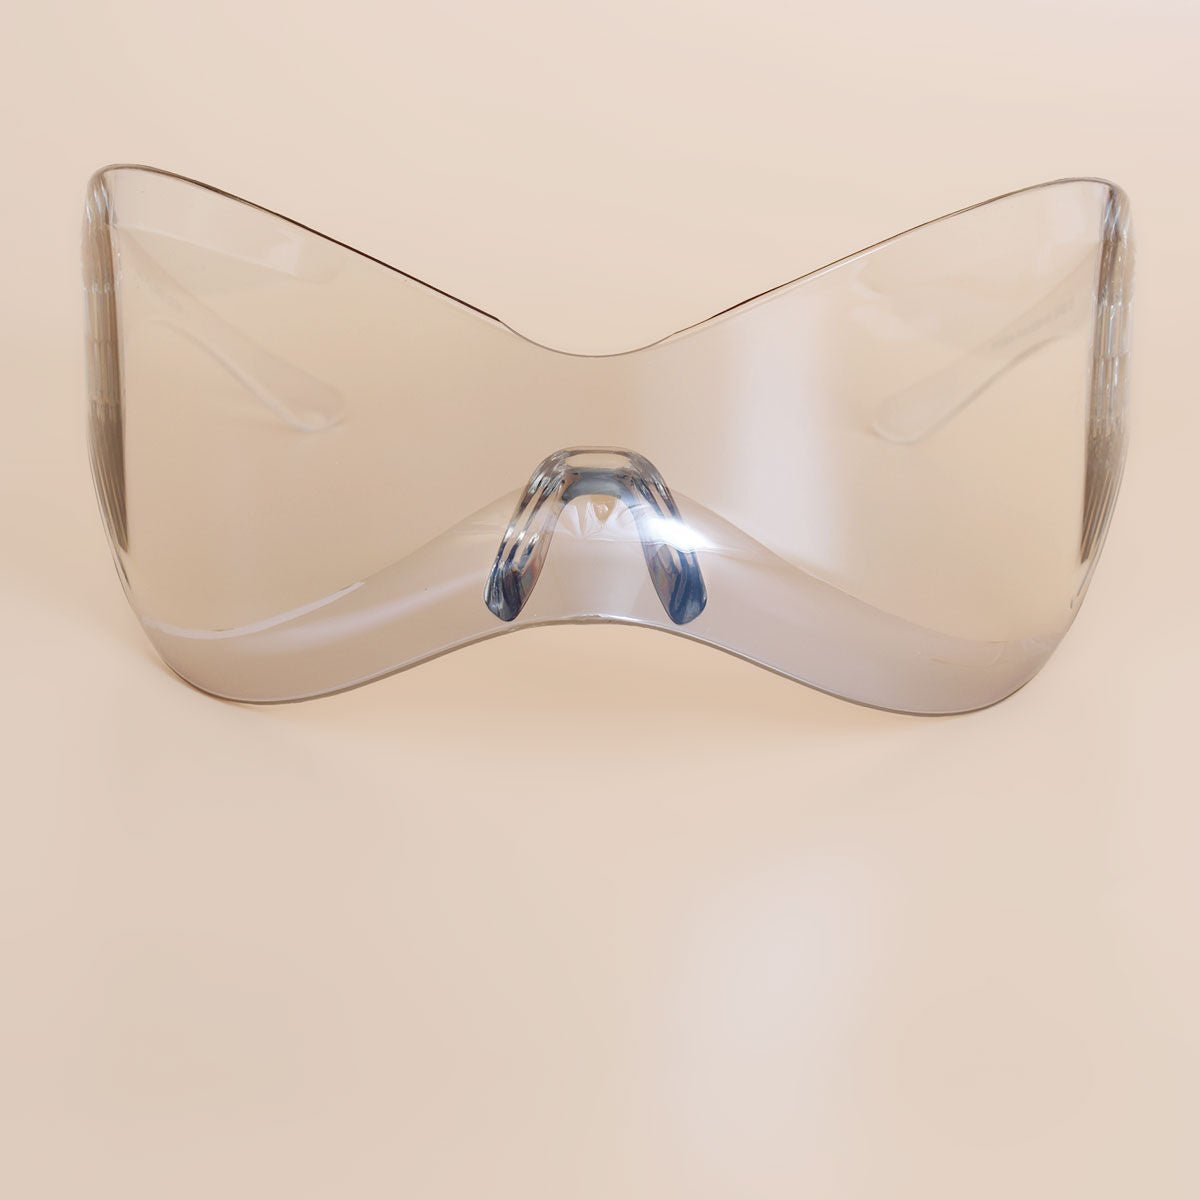 Sunglasses Mask Wrap Clear Eyewear for Women - Bae Apparel